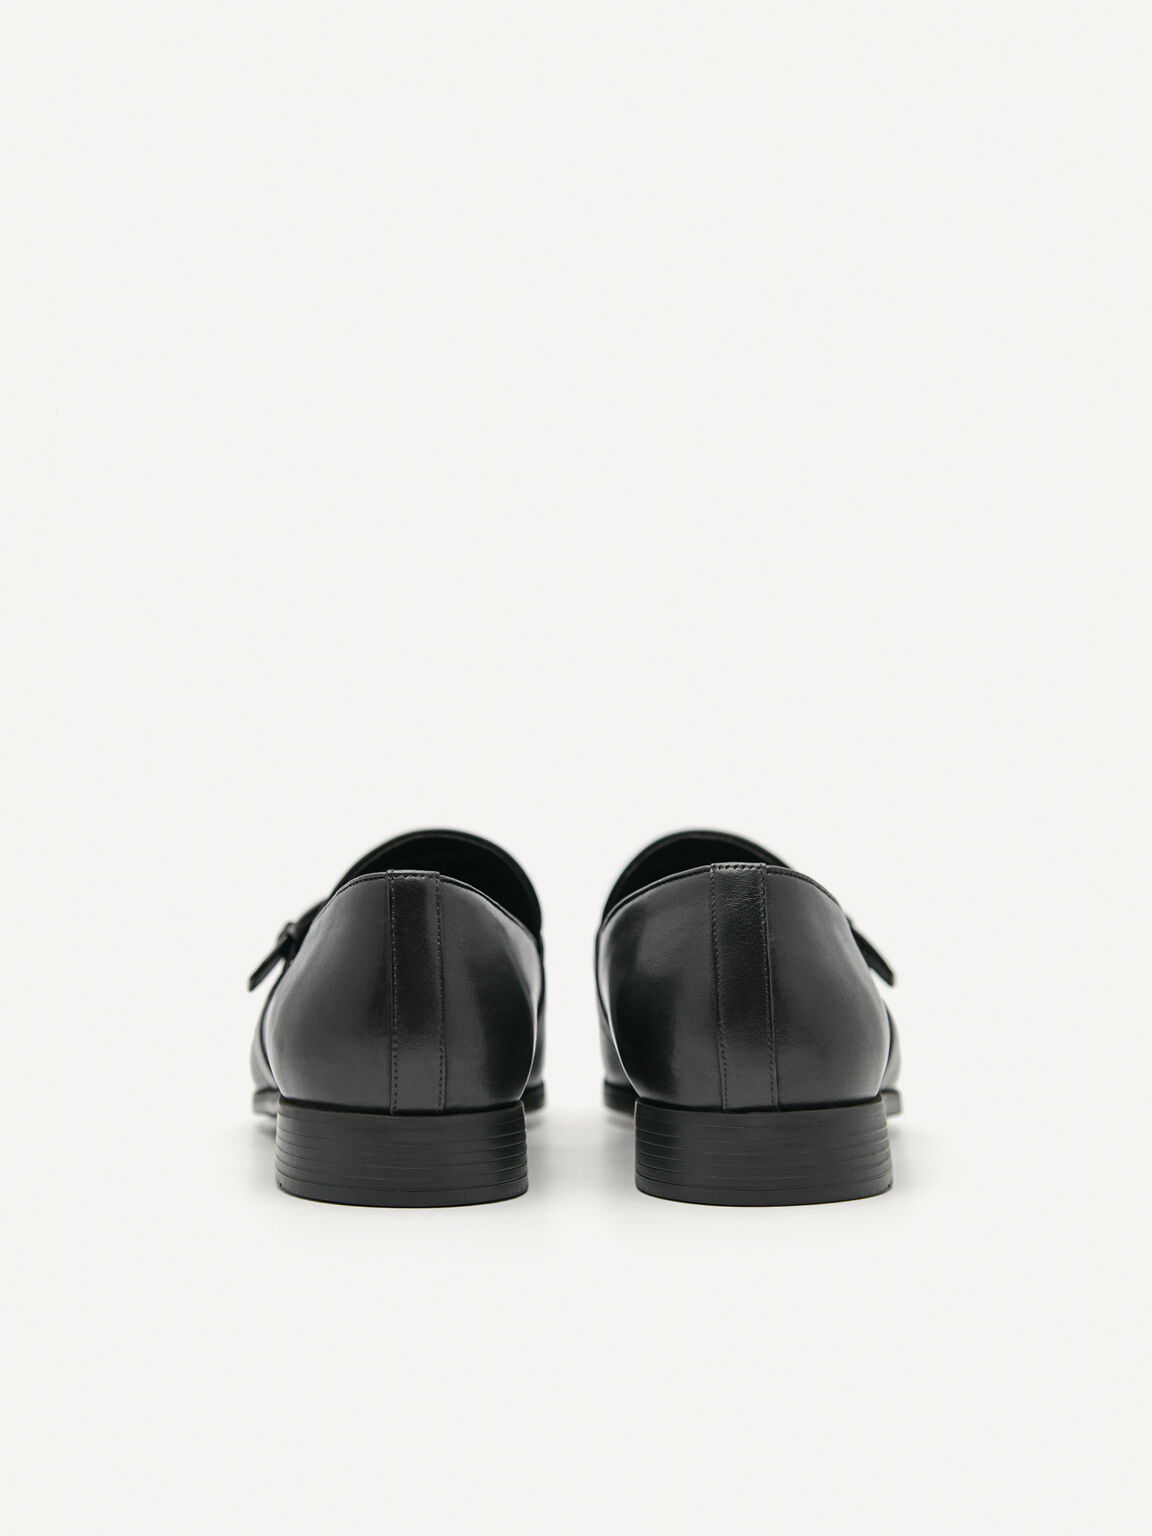 Brando Leather Loafers, Black